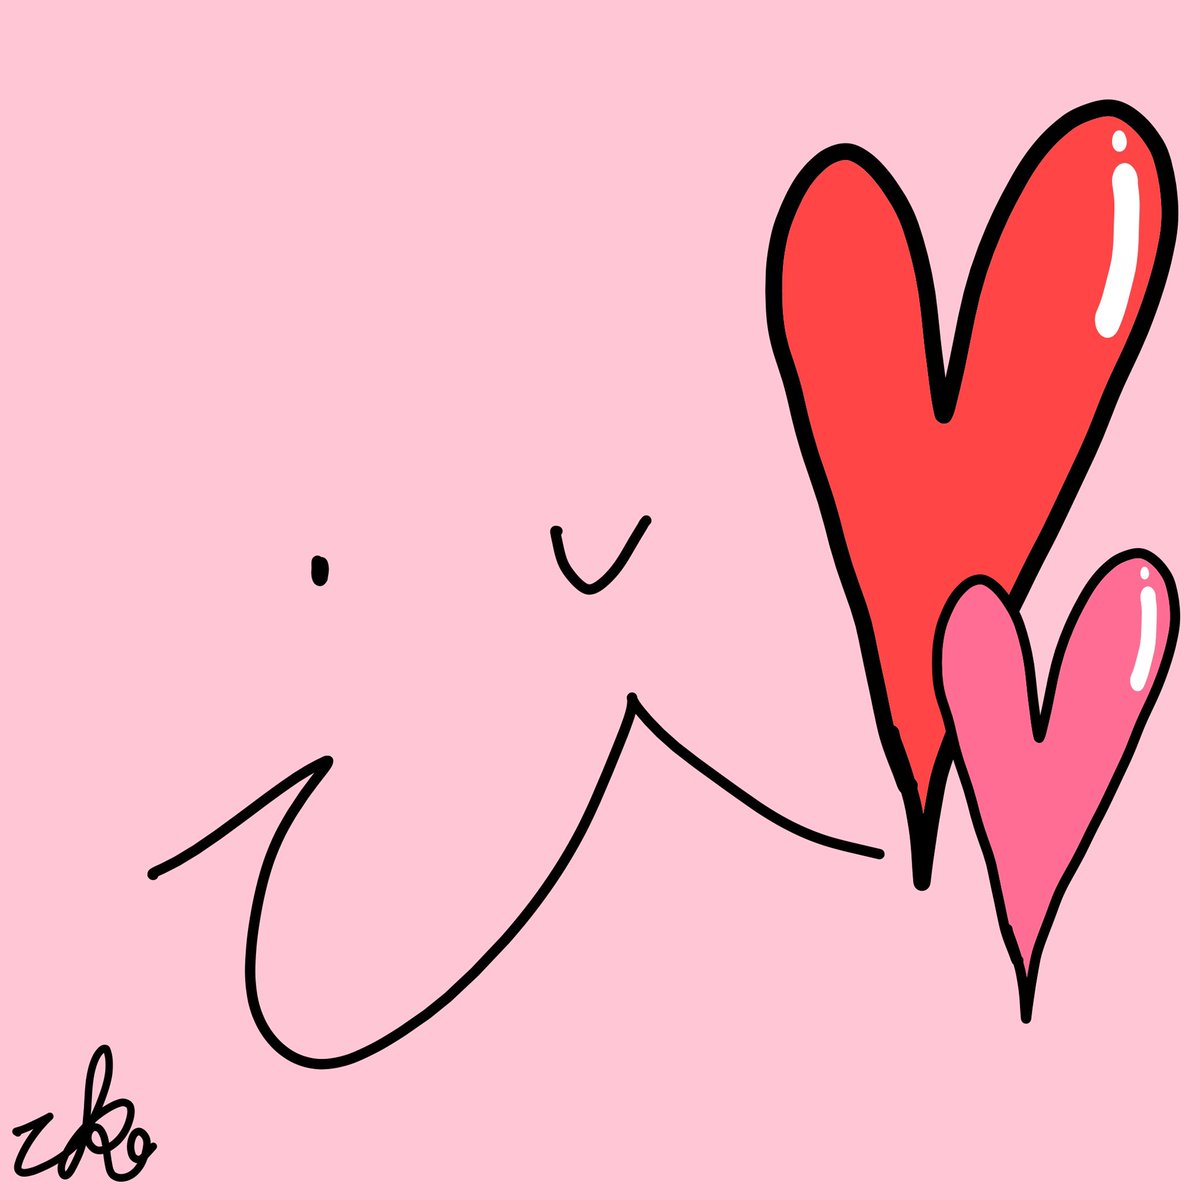 Give a little love for you.
Just a little( ¨̮ )

#my #drawing #painting #positivevibes #goodday #happy #doodle #popart #tokyo #nihon #japan #art #bigginer #bigginerartist  #hikoekaki #hikoodle #justalittlelove #little #love #for #happy #heart